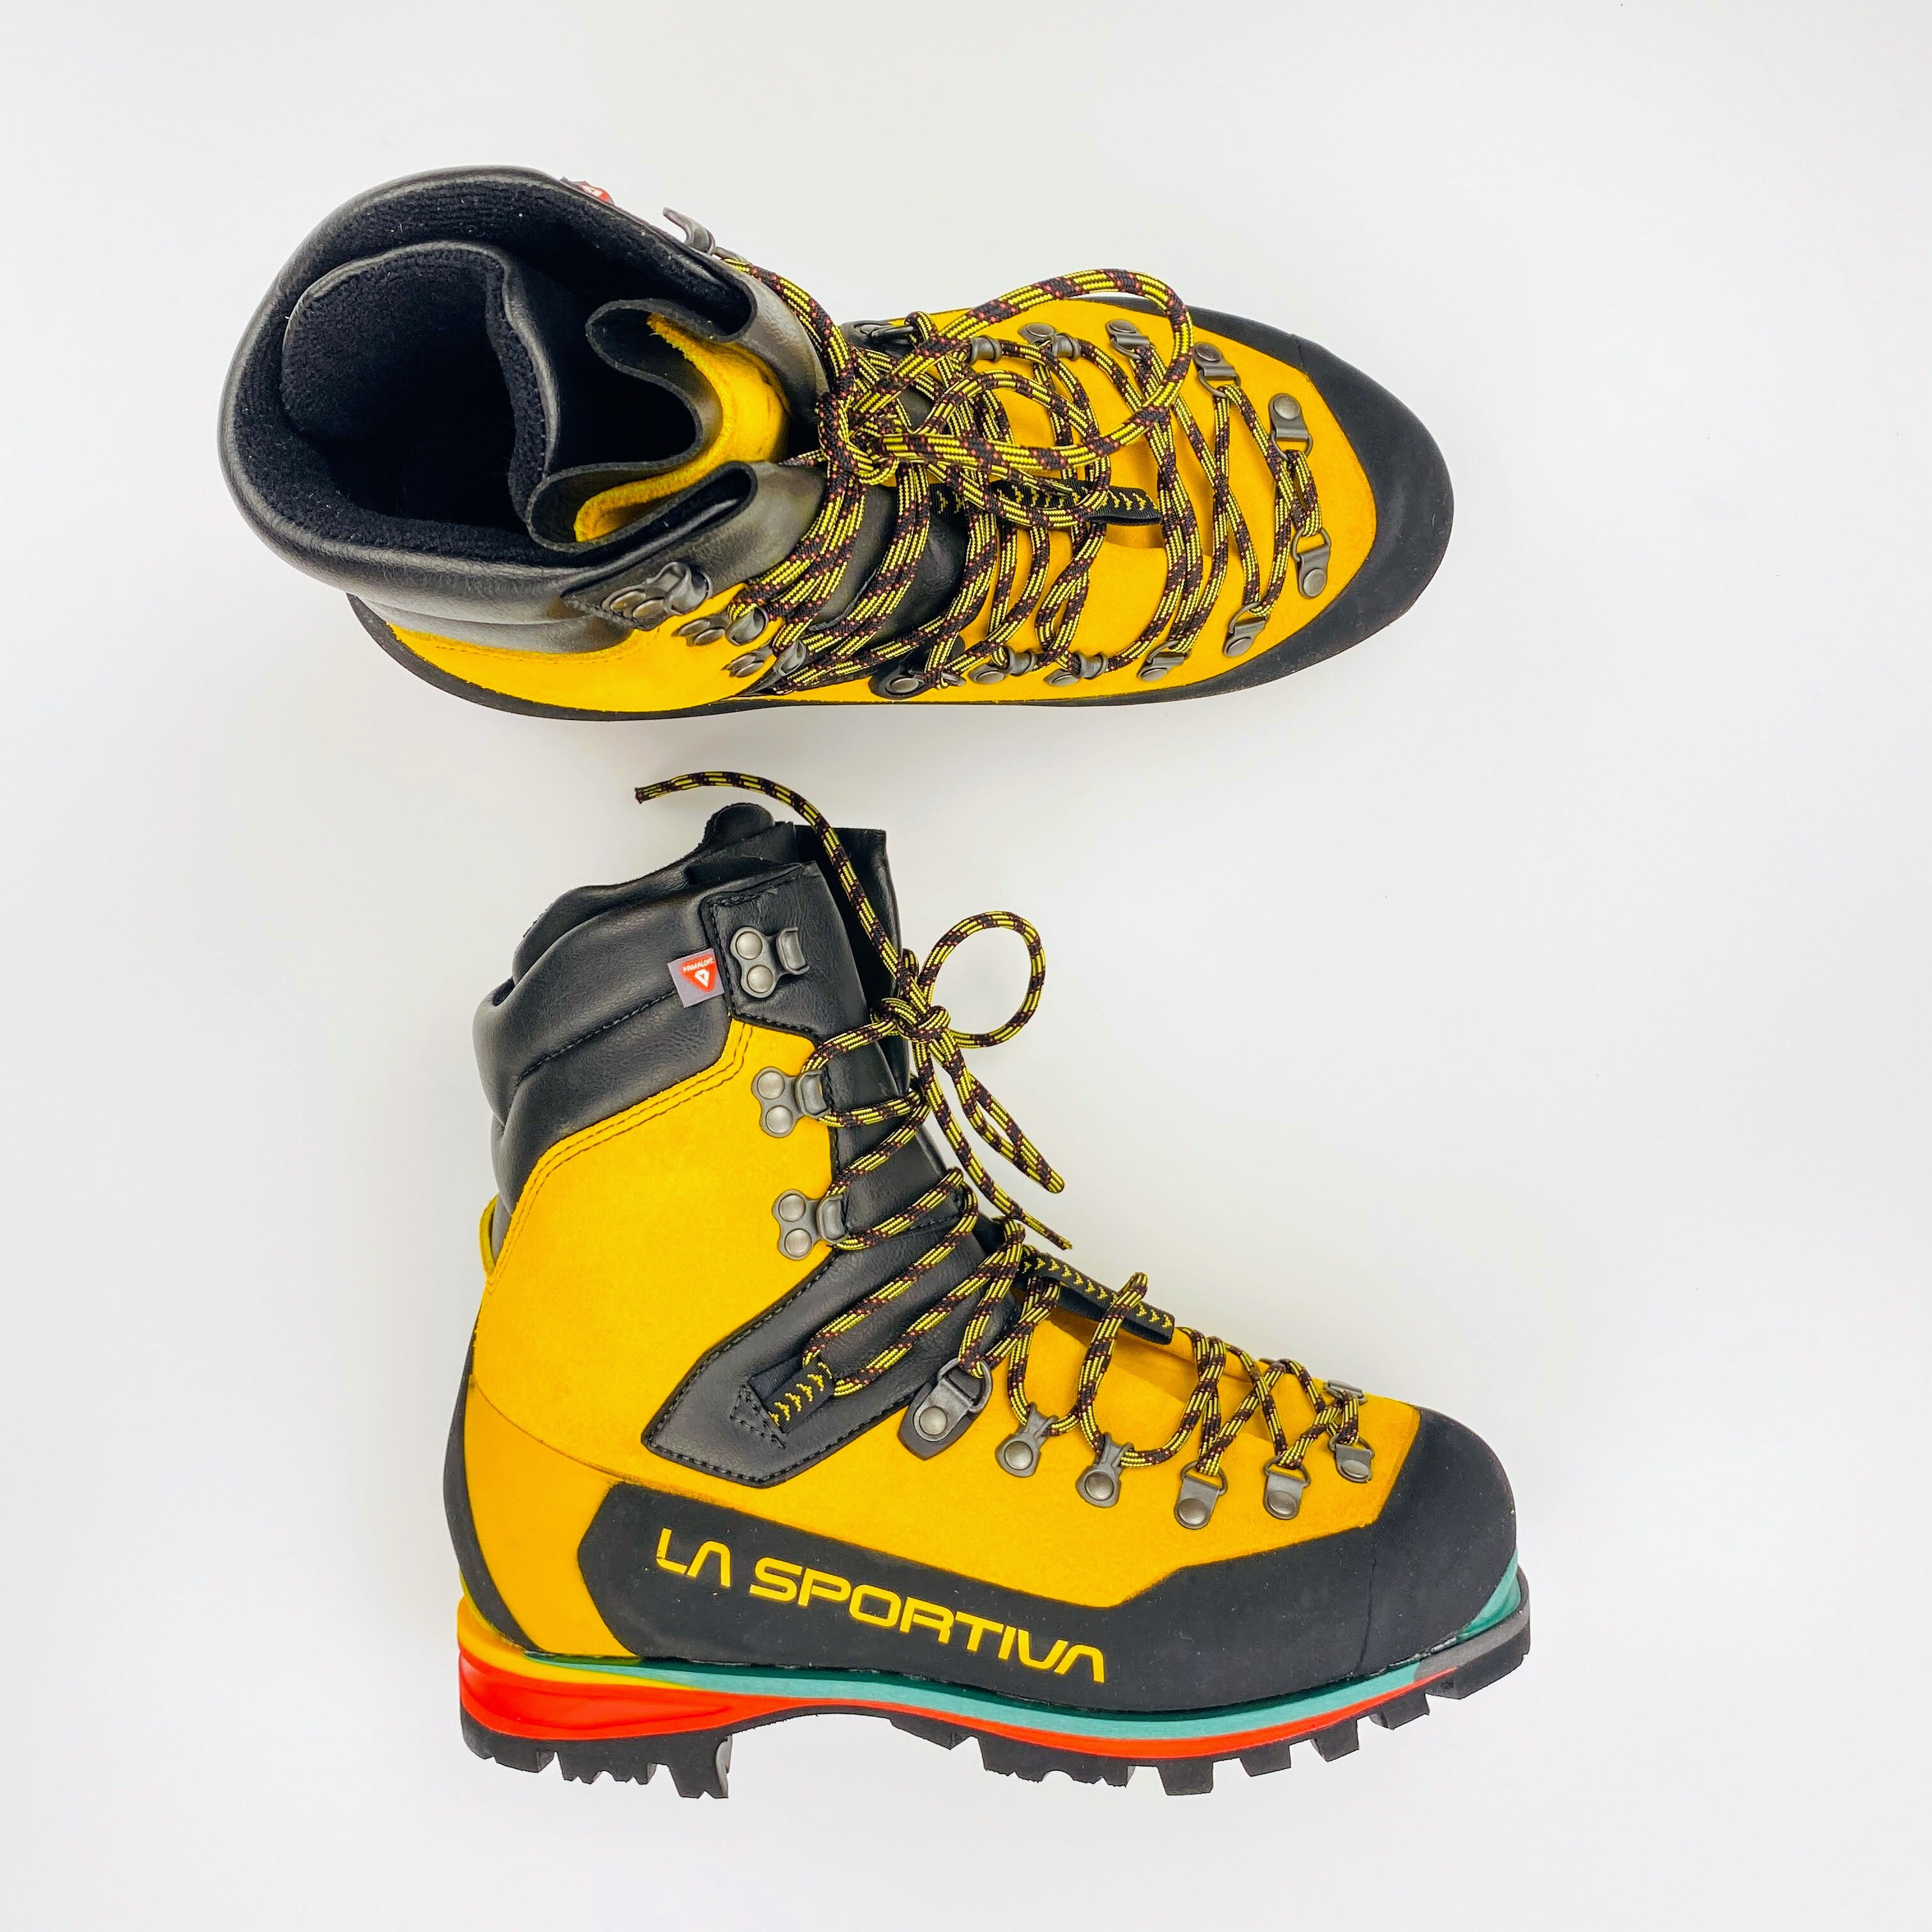 La Sportiva Nepal Extreme - Seconde main Chaussures alpinisme homme - Jaune - 42.5 | Hardloop